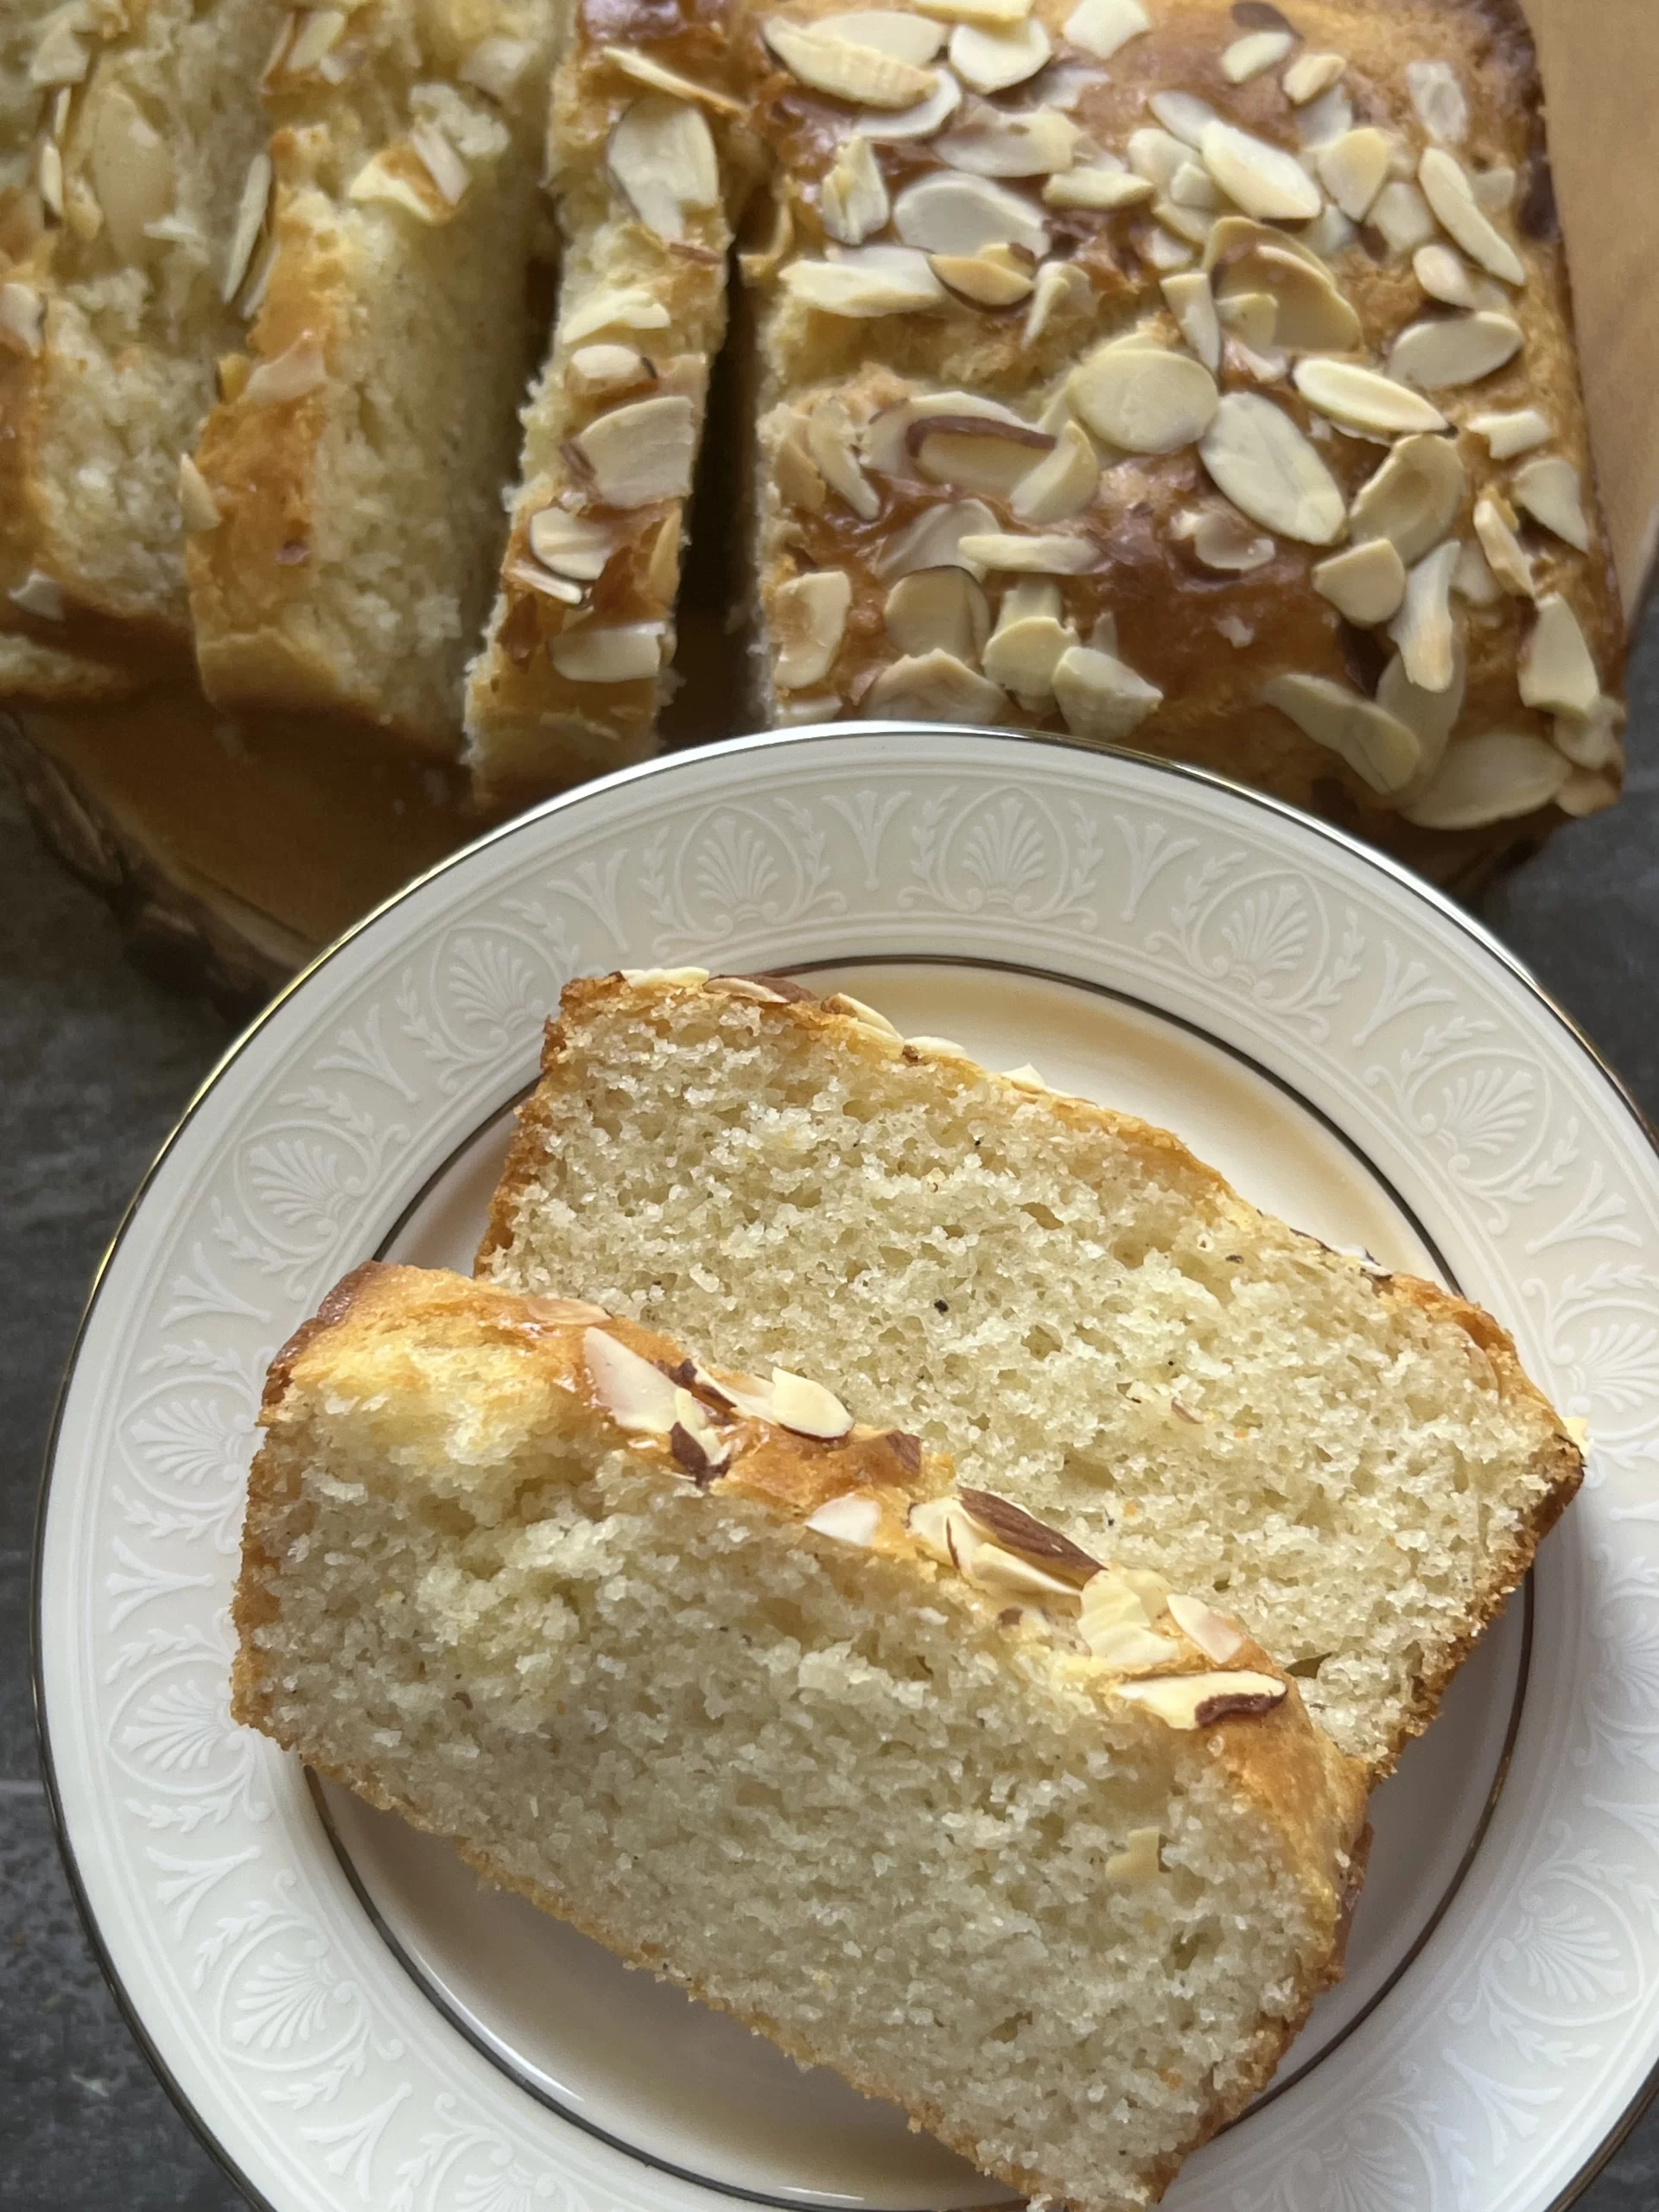 Almond Cake Recipes